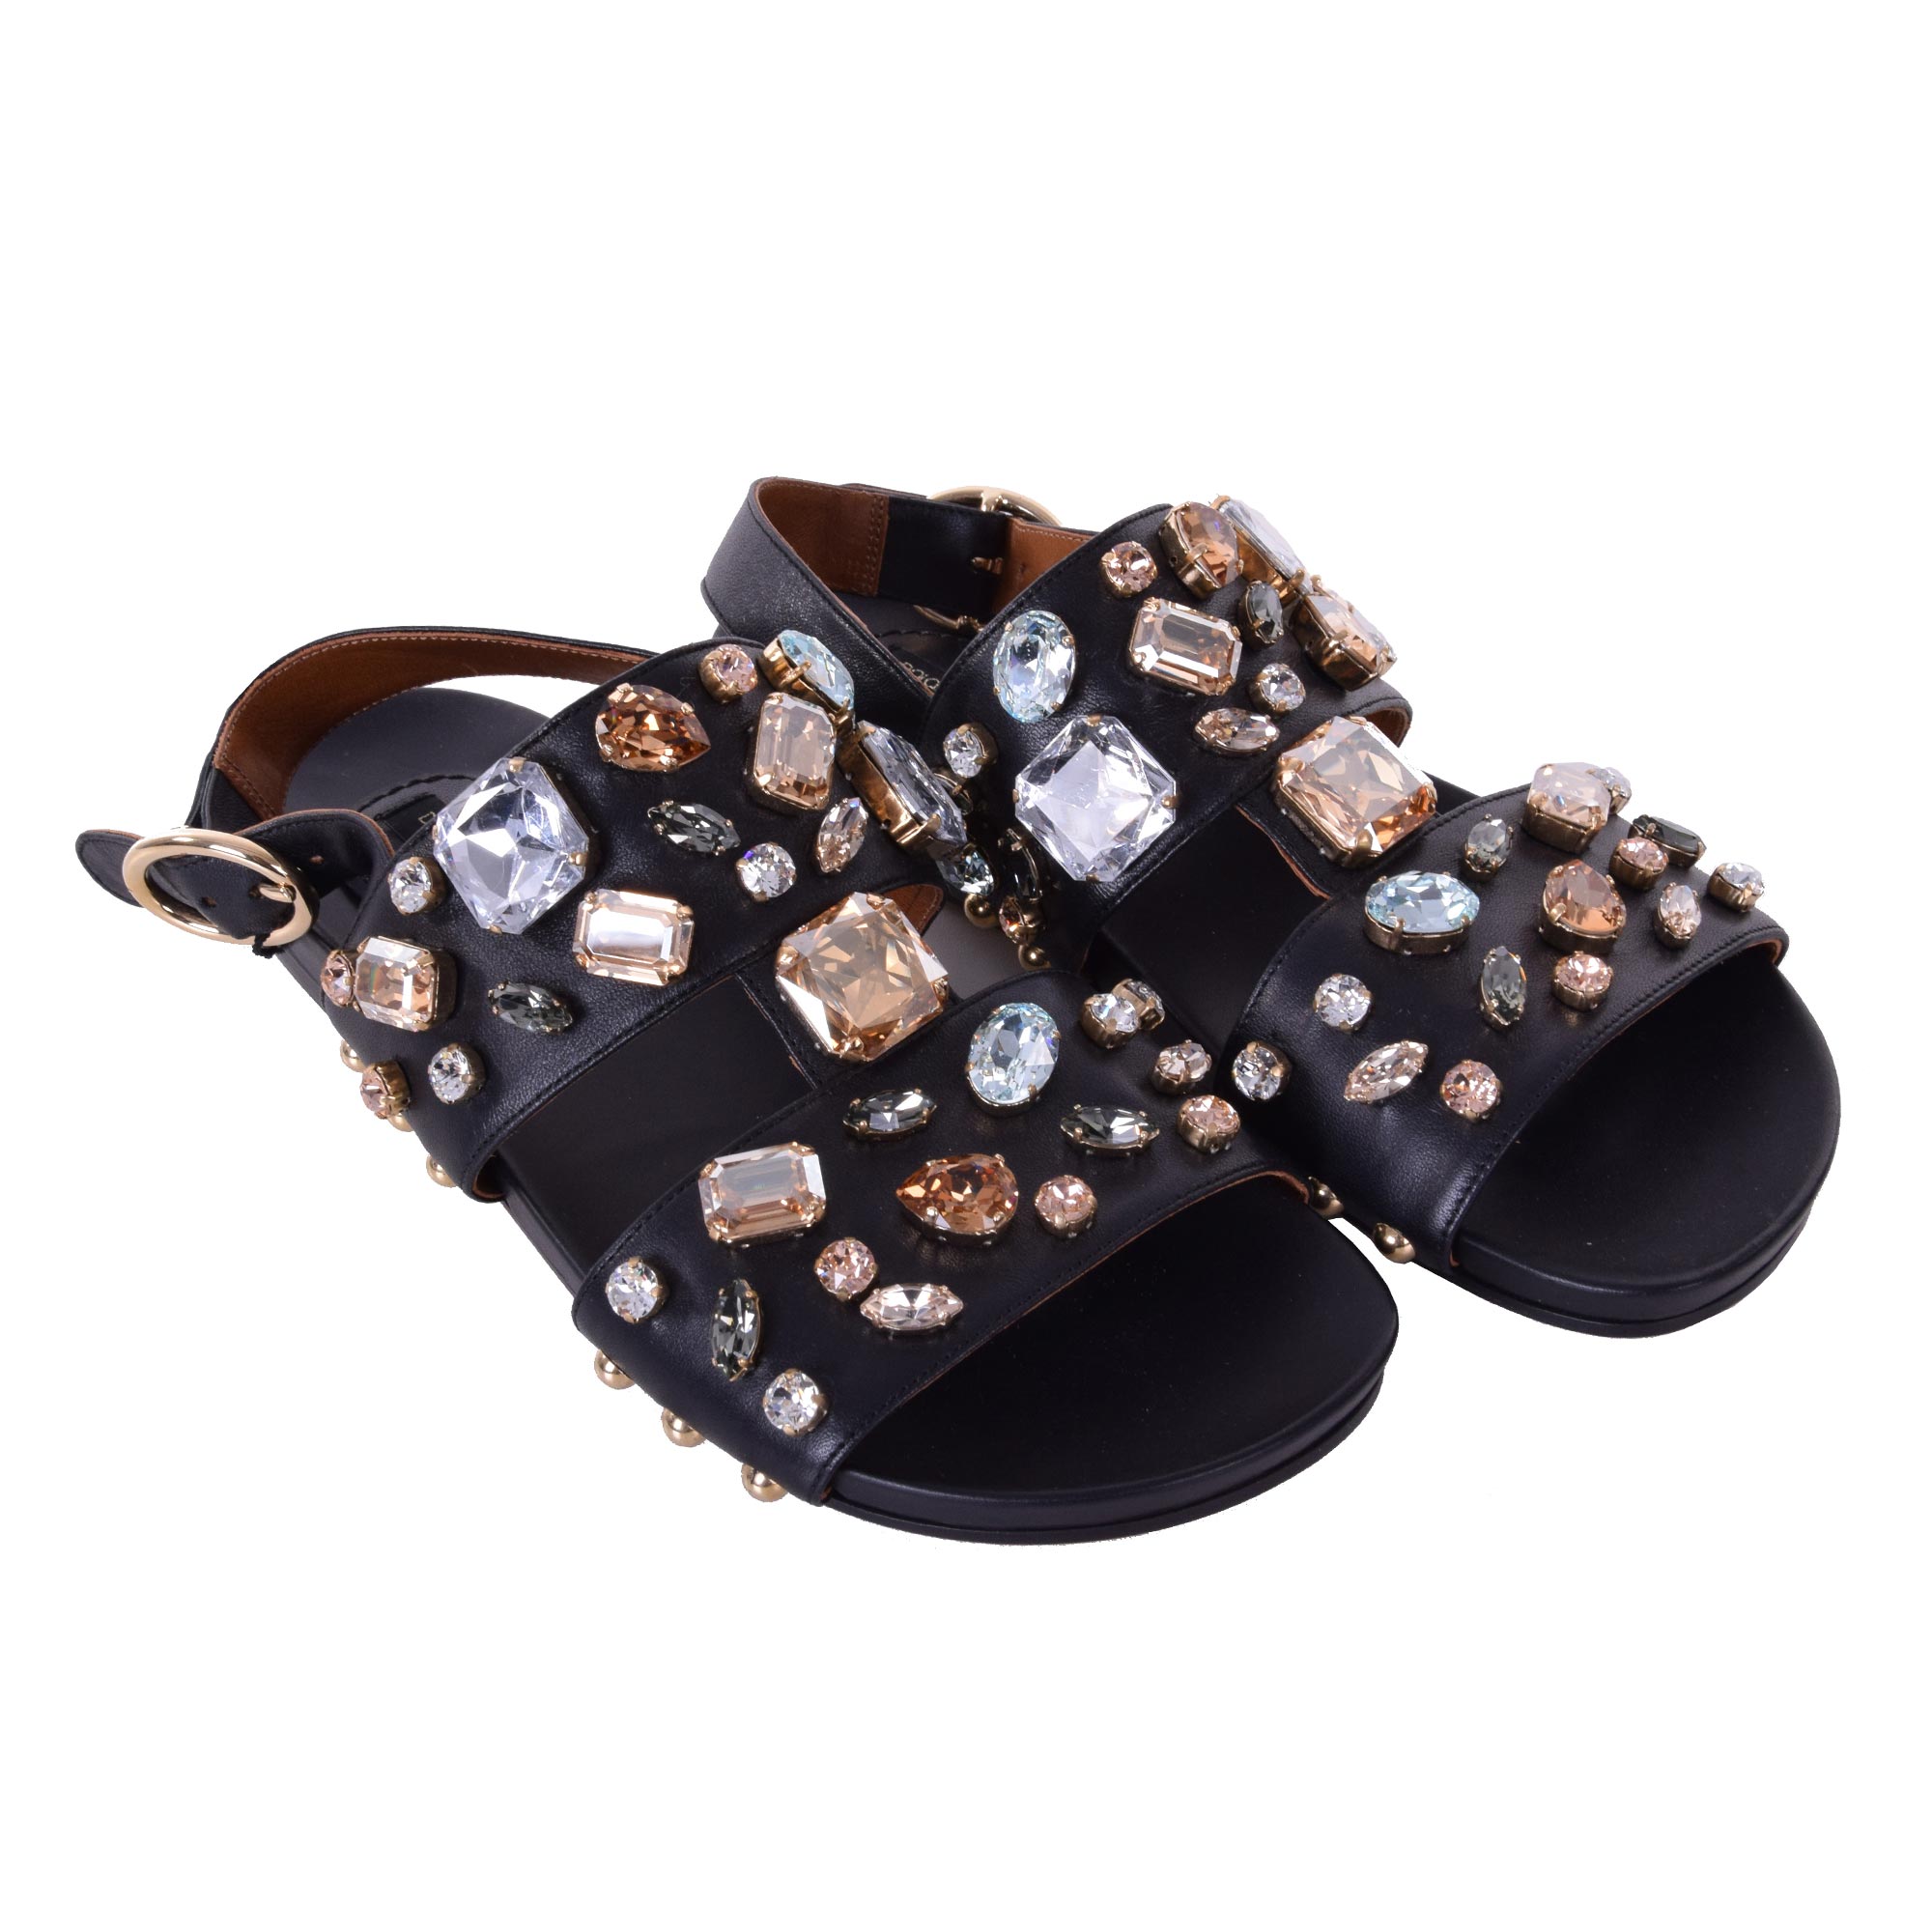 Dolce & Gabbana Named a Shoe the 'Slave Sandal' - Racked